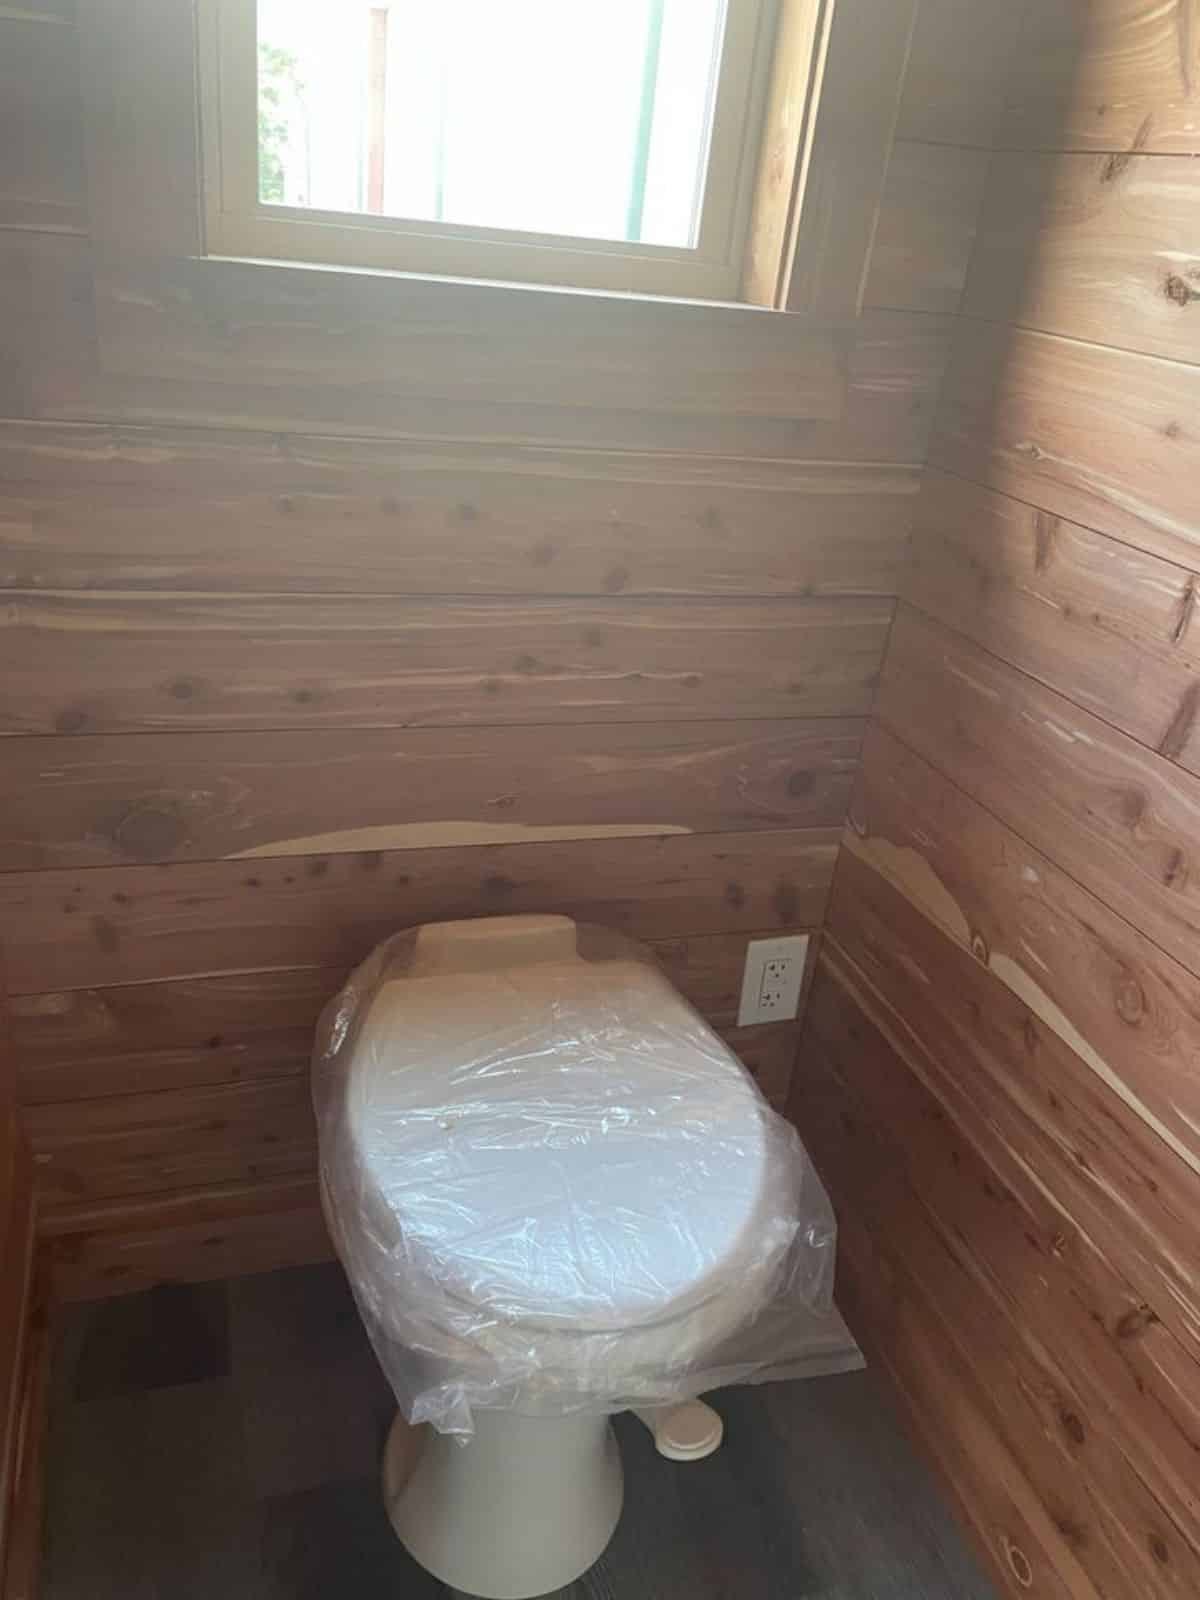 Standard toilet is also installed in bathroom